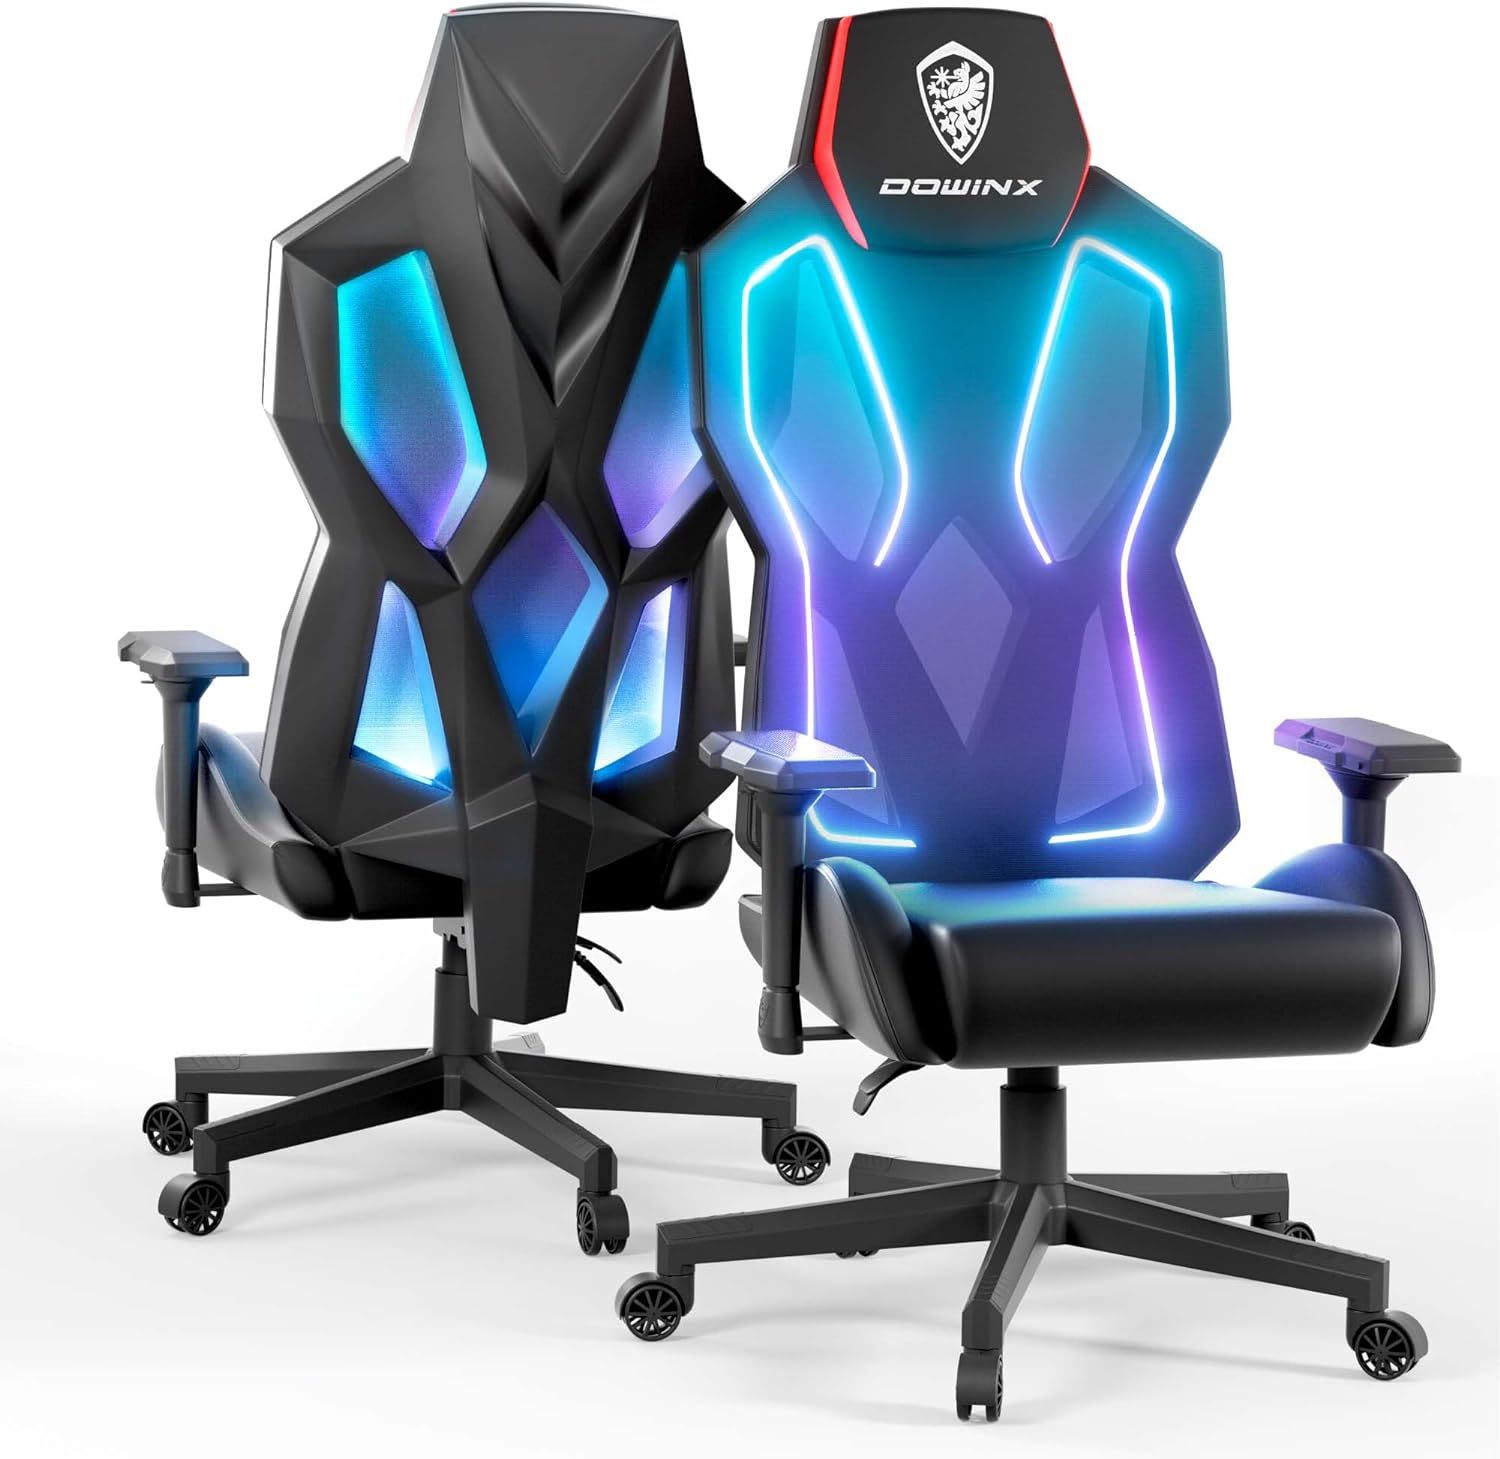 Dowinx RGB Gaming Chair